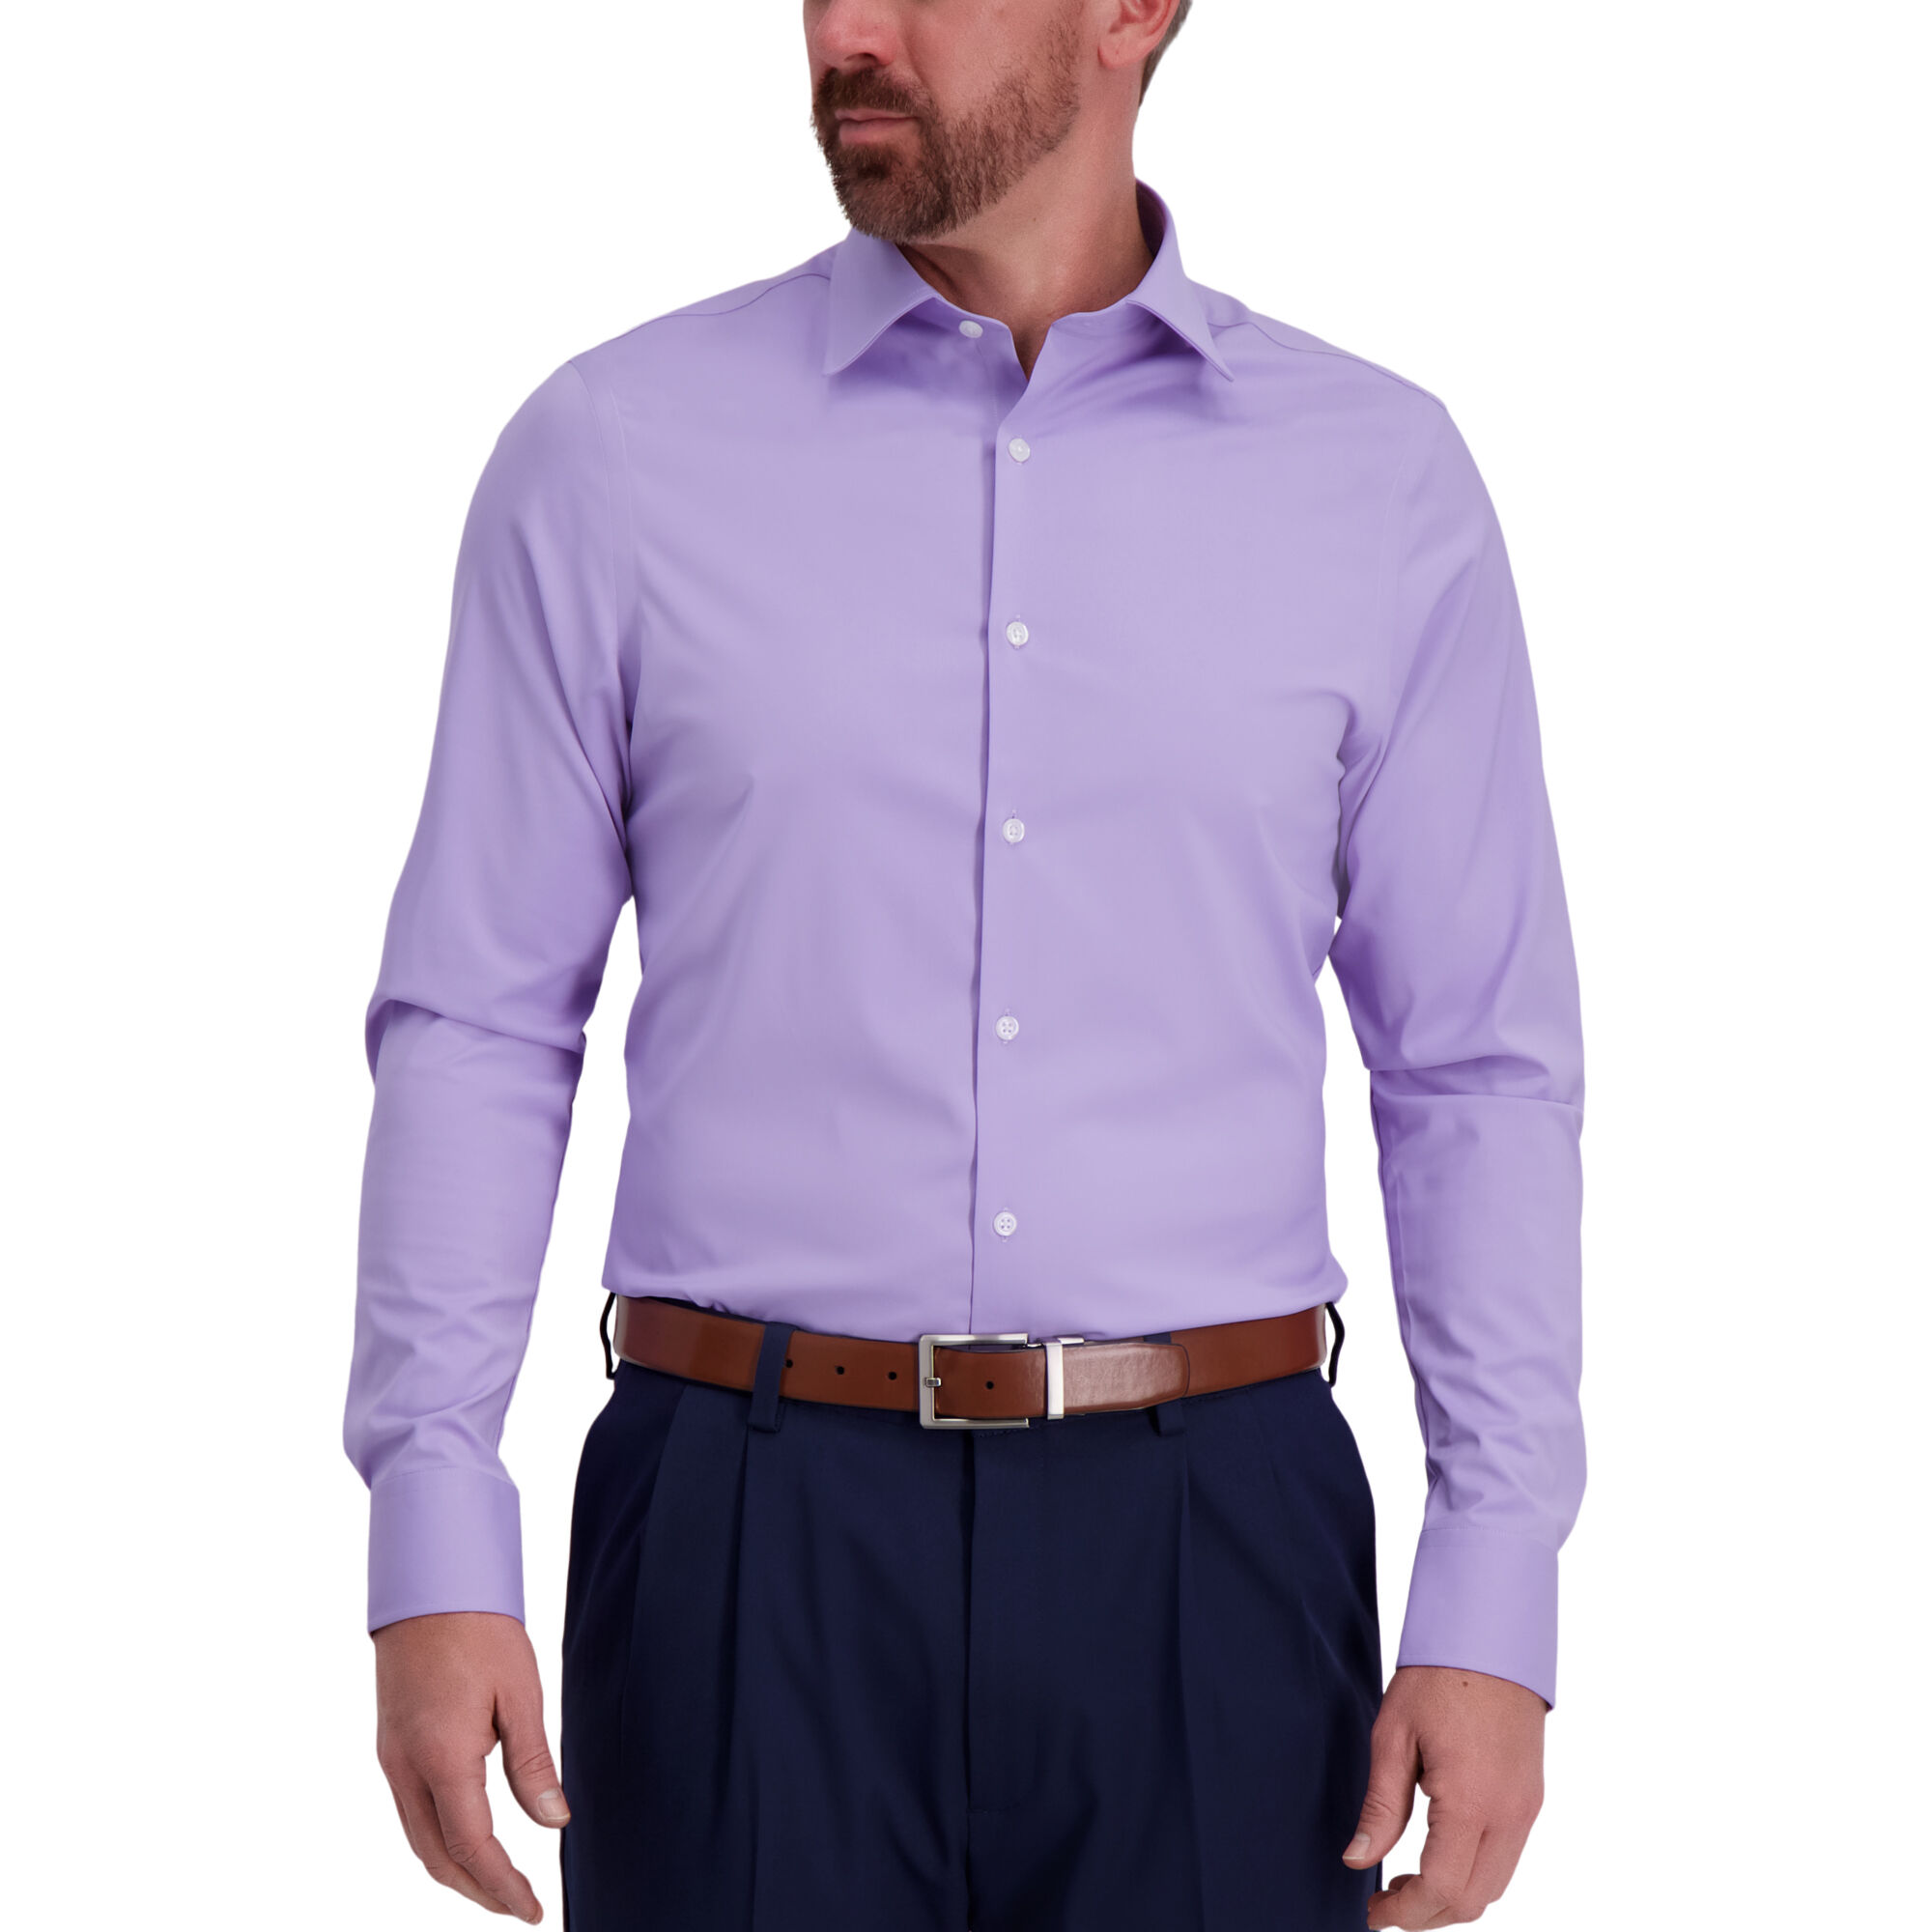 J.M. Haggar Tech Performance Lavender Dress Shirt Purple (HAT002HT328 Clothing Shirts & Tops) photo